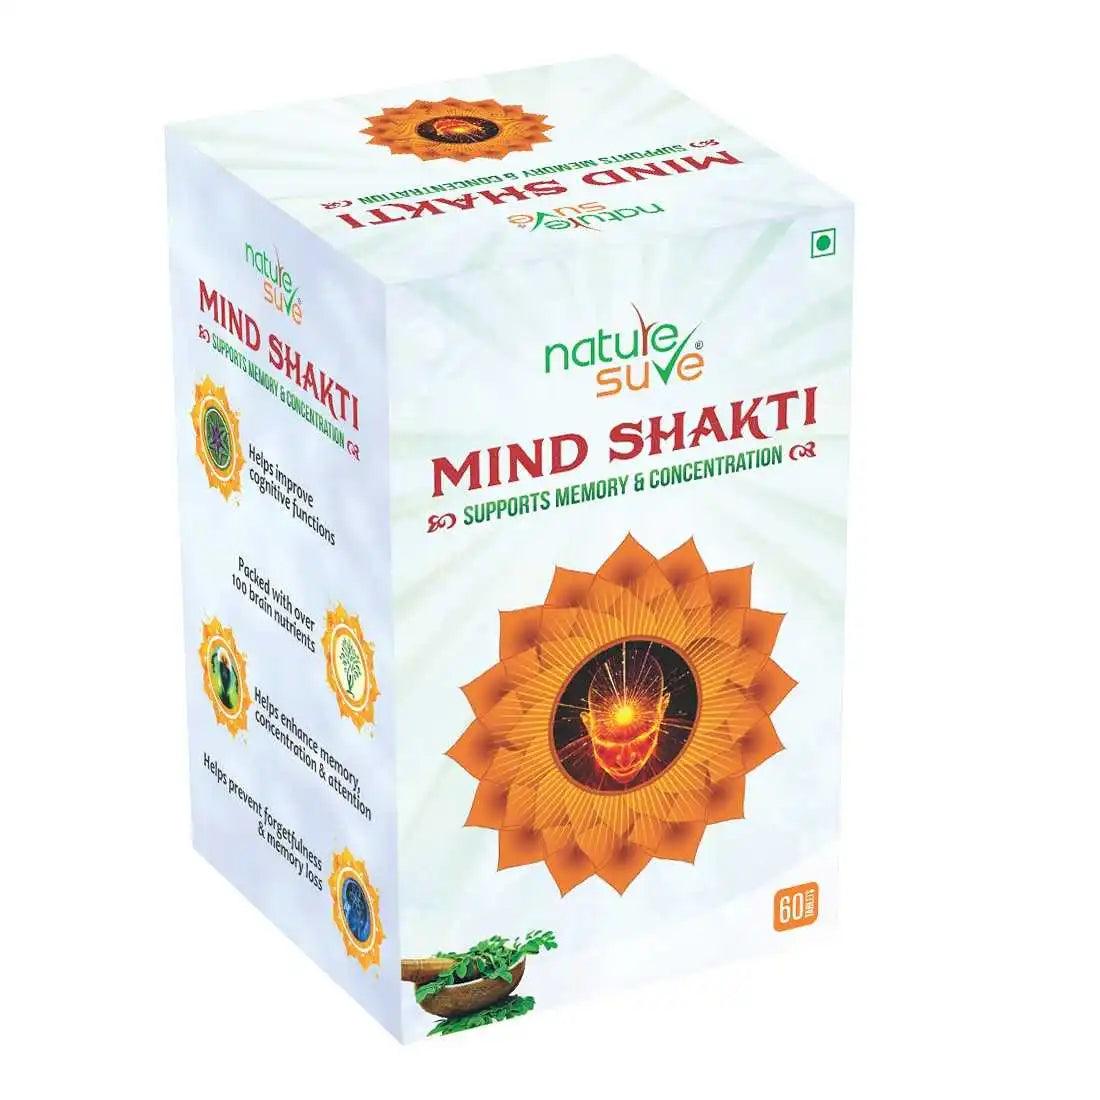 Nature Sure Mind Shakti Tablets help prevent forgetfulness - everteen-neud.com